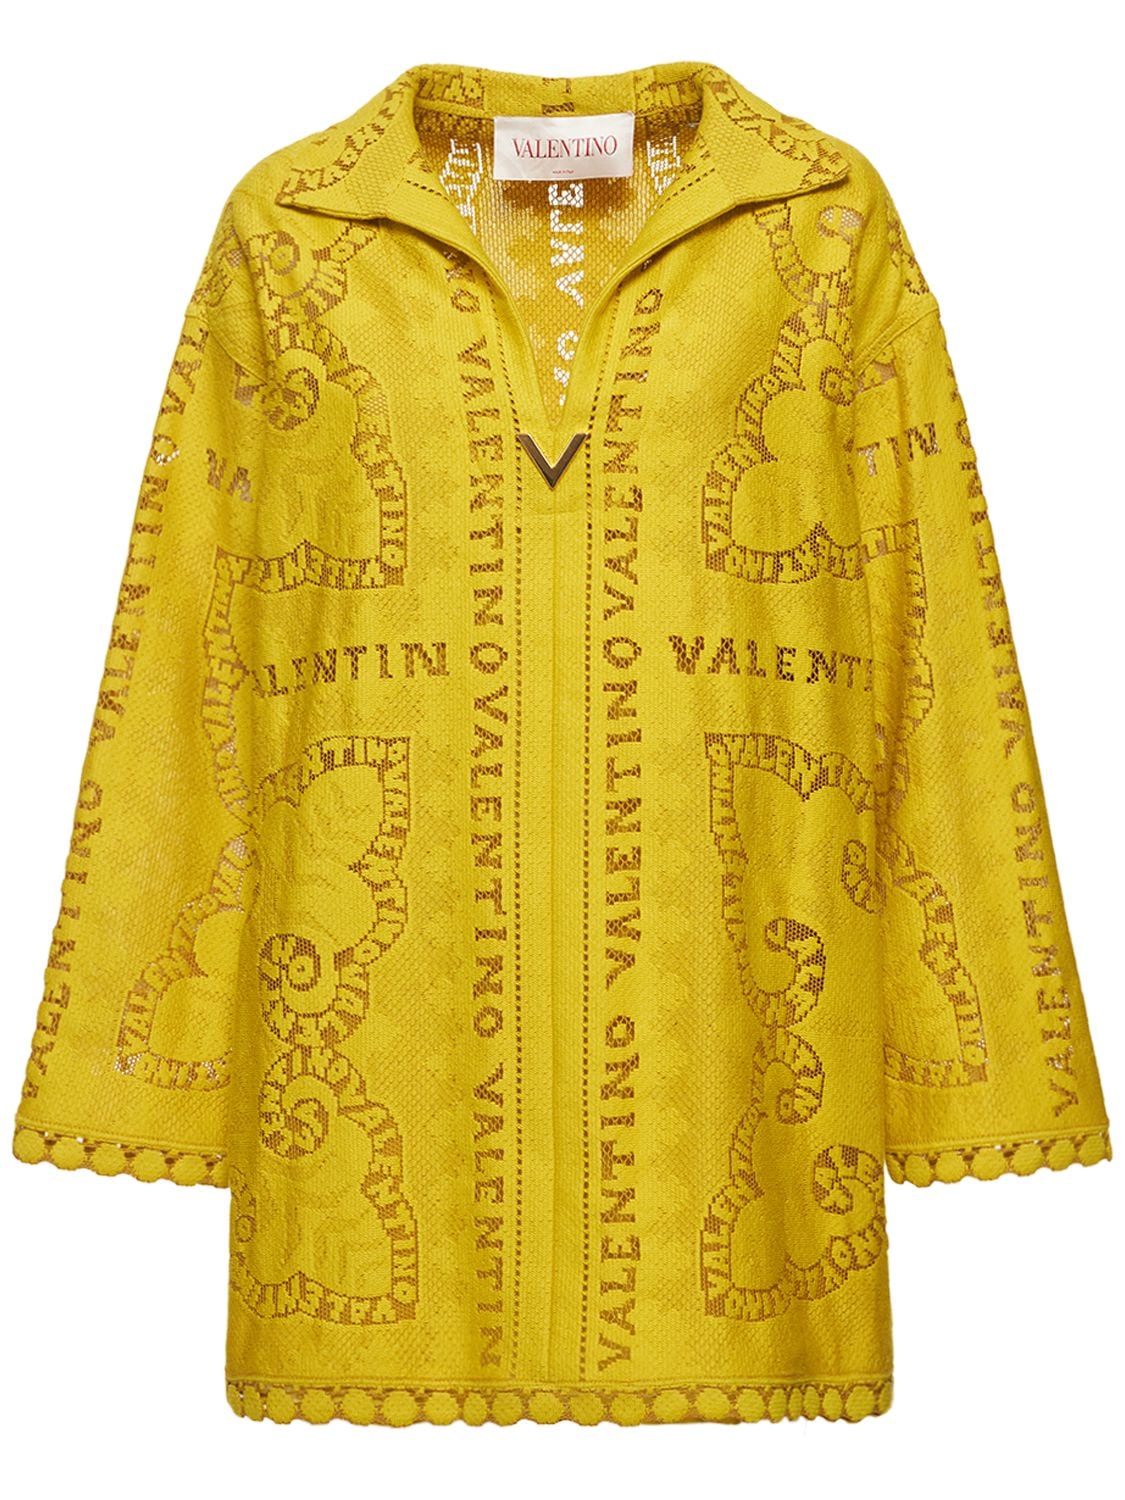 VALENTINO V LOGO COTTON GUIPURE LACE SHIRT DRESS